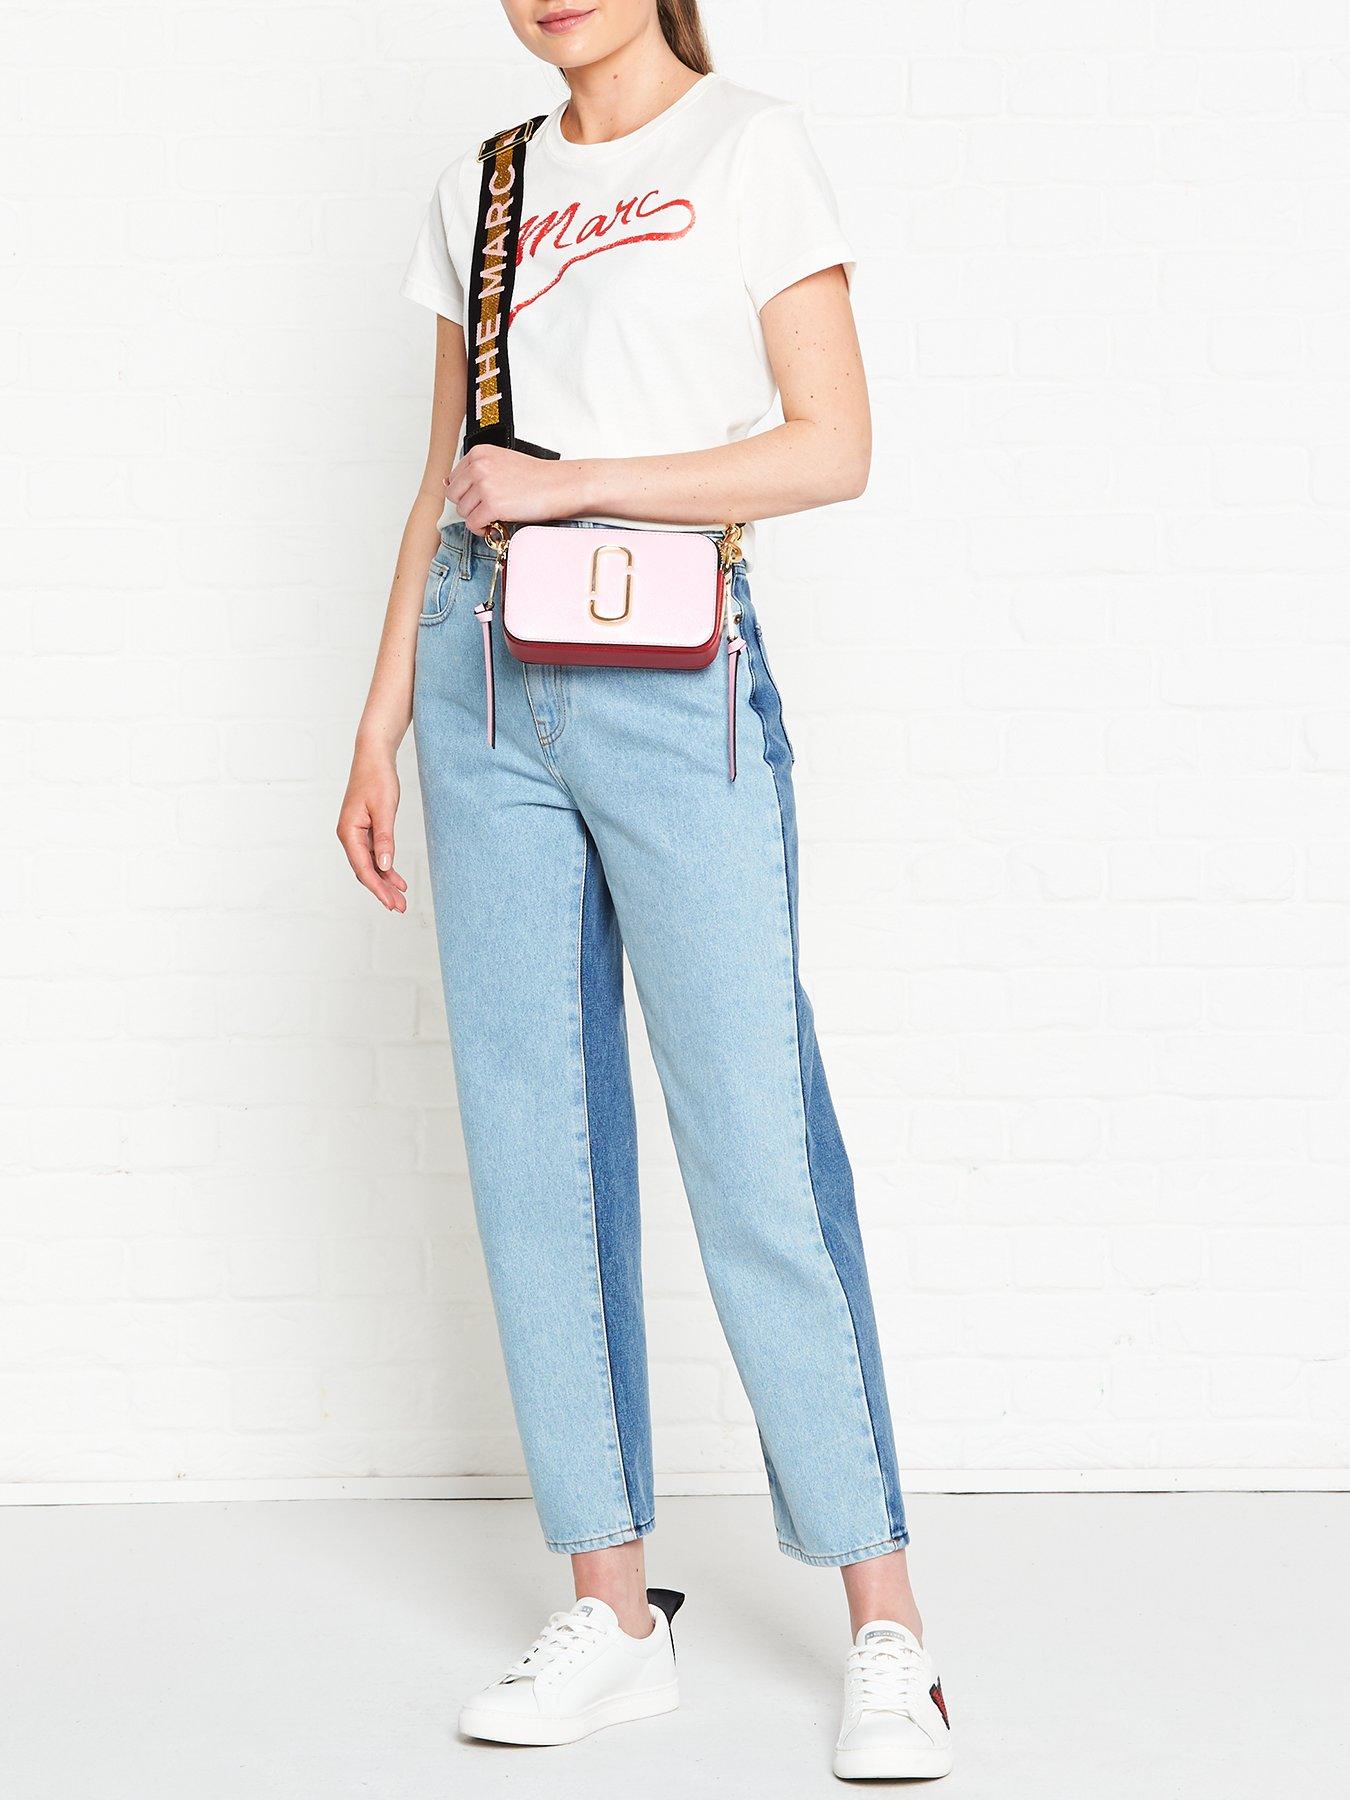 Marc Jacobs Logo Stripe Bag Strap in Pink